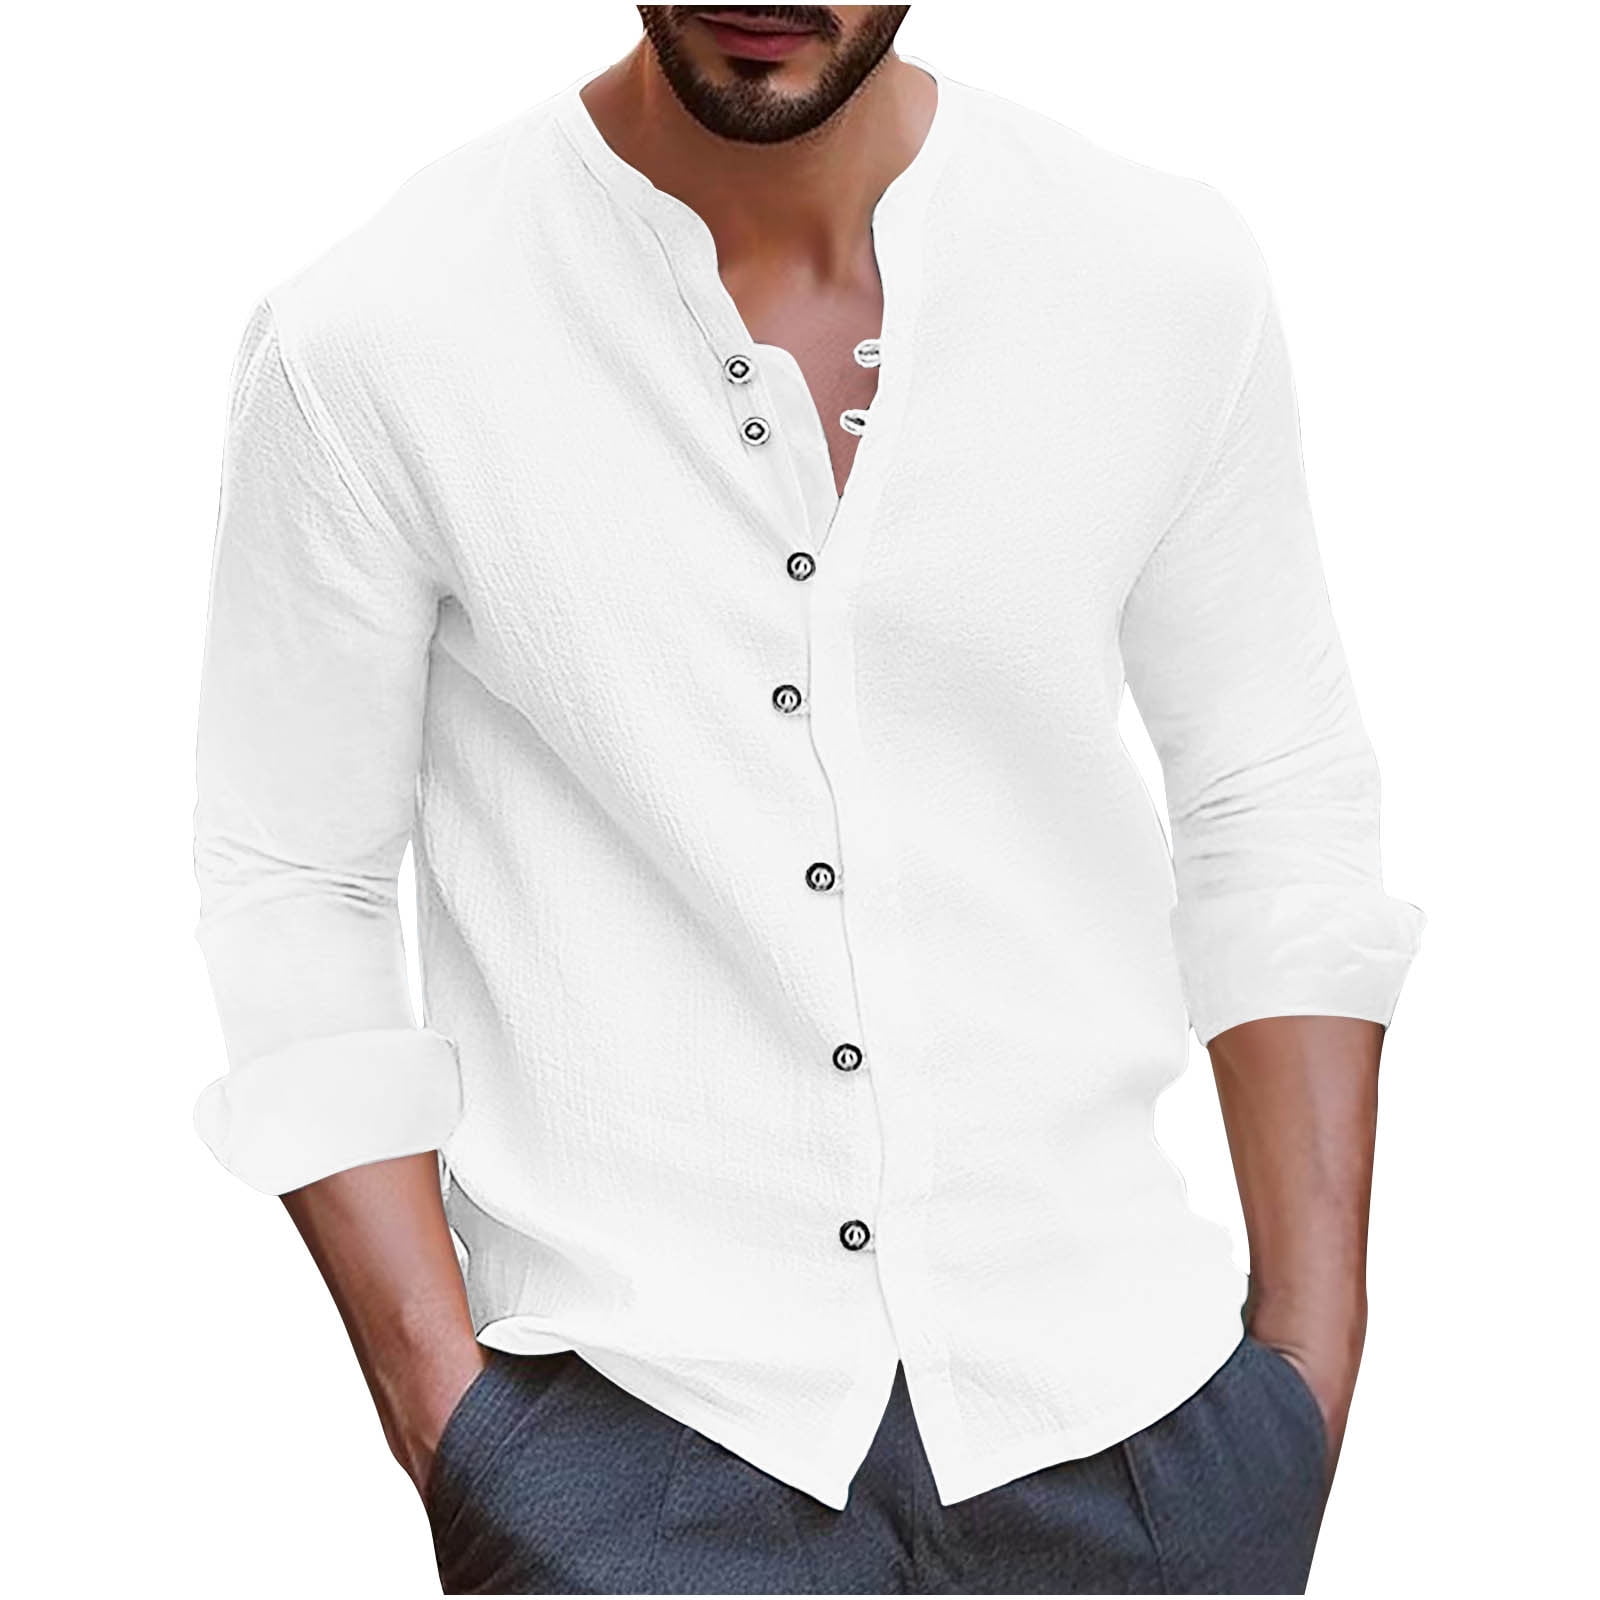 Elainilye Fashion Shirt Button Up Shirt Men Casual Solid Round Neck Button  Long Sleeve Shirt Blouse Tops,White 